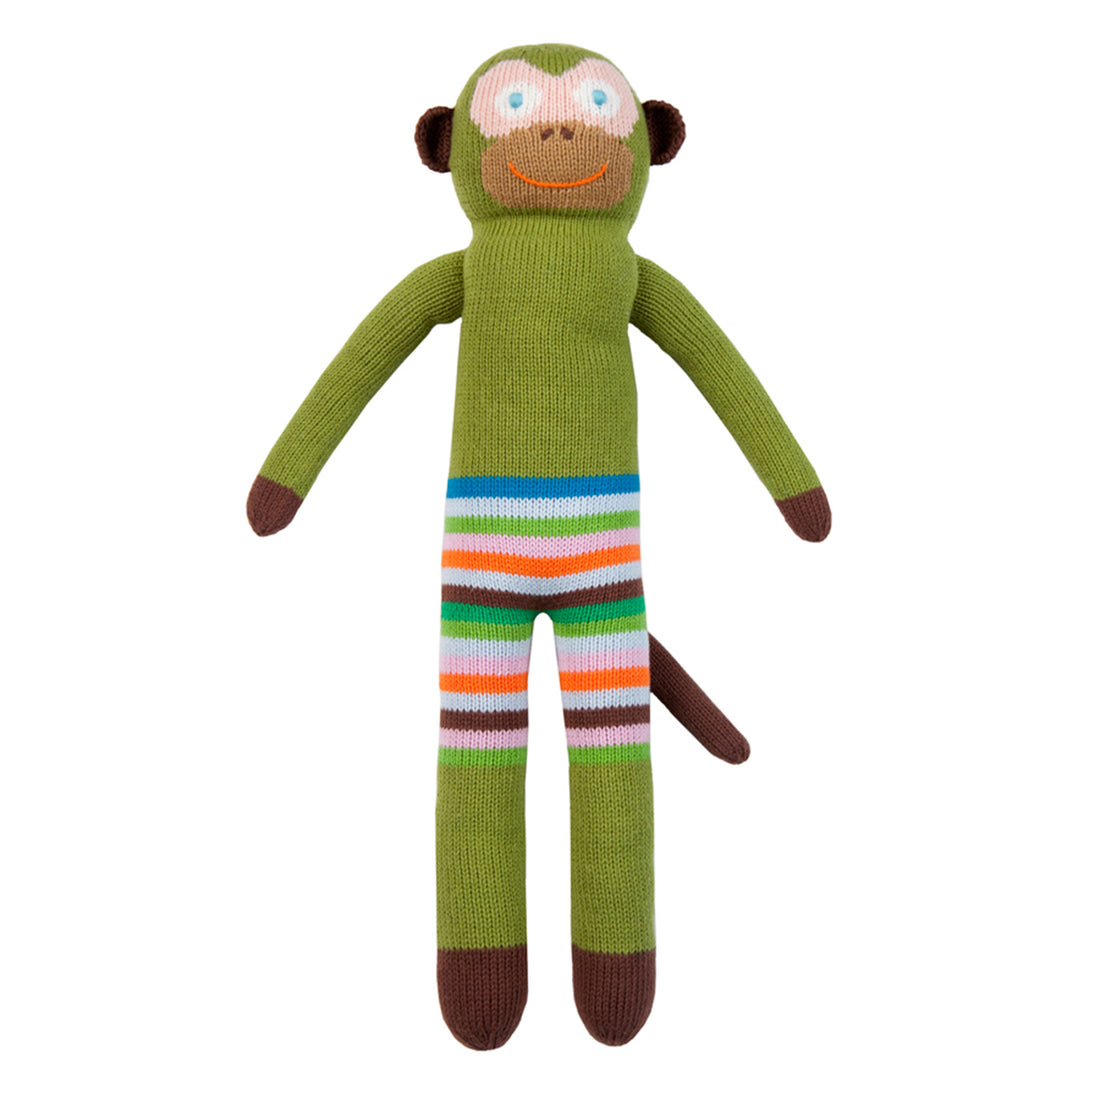 blabla-kids-verdi-the-monkey-play-hug-plushy-baby-kid-knit-doll-blab-105026-02